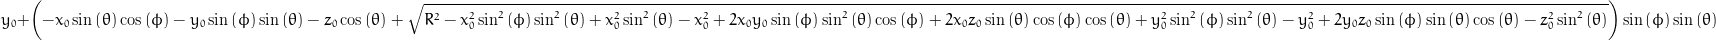 y_{0} + \left(- x_{0} \sin{\left (\theta \right )} \cos{\left (\phi \right )} - y_{0} \sin{\left (\phi \right )} \sin{\left (\theta \right )} - z_{0} \cos{\left (\theta \right )} + \sqrt{R^{2} - x_{0}^{2} \sin^{2}{\left (\phi \right )} \sin^{2}{\left (\theta \right )} + x_{0}^{2} \sin^{2}{\left (\theta \right )} - x_{0}^{2} + 2 x_{0} y_{0} \sin{\left (\phi \right )} \sin^{2}{\left (\theta \right )} \cos{\left (\phi \right )} + 2 x_{0} z_{0} \sin{\left (\theta \right )} \cos{\left (\phi \right )} \cos{\left (\theta \right )} + y_{0}^{2} \sin^{2}{\left (\phi \right )} \sin^{2}{\left (\theta \right )} - y_{0}^{2} + 2 y_{0} z_{0} \sin{\left (\phi \right )} \sin{\left (\theta \right )} \cos{\left (\theta \right )} - z_{0}^{2} \sin^{2}{\left (\theta \right )}}\right) \sin{\left (\phi \right )} \sin{\left (\theta \right )}